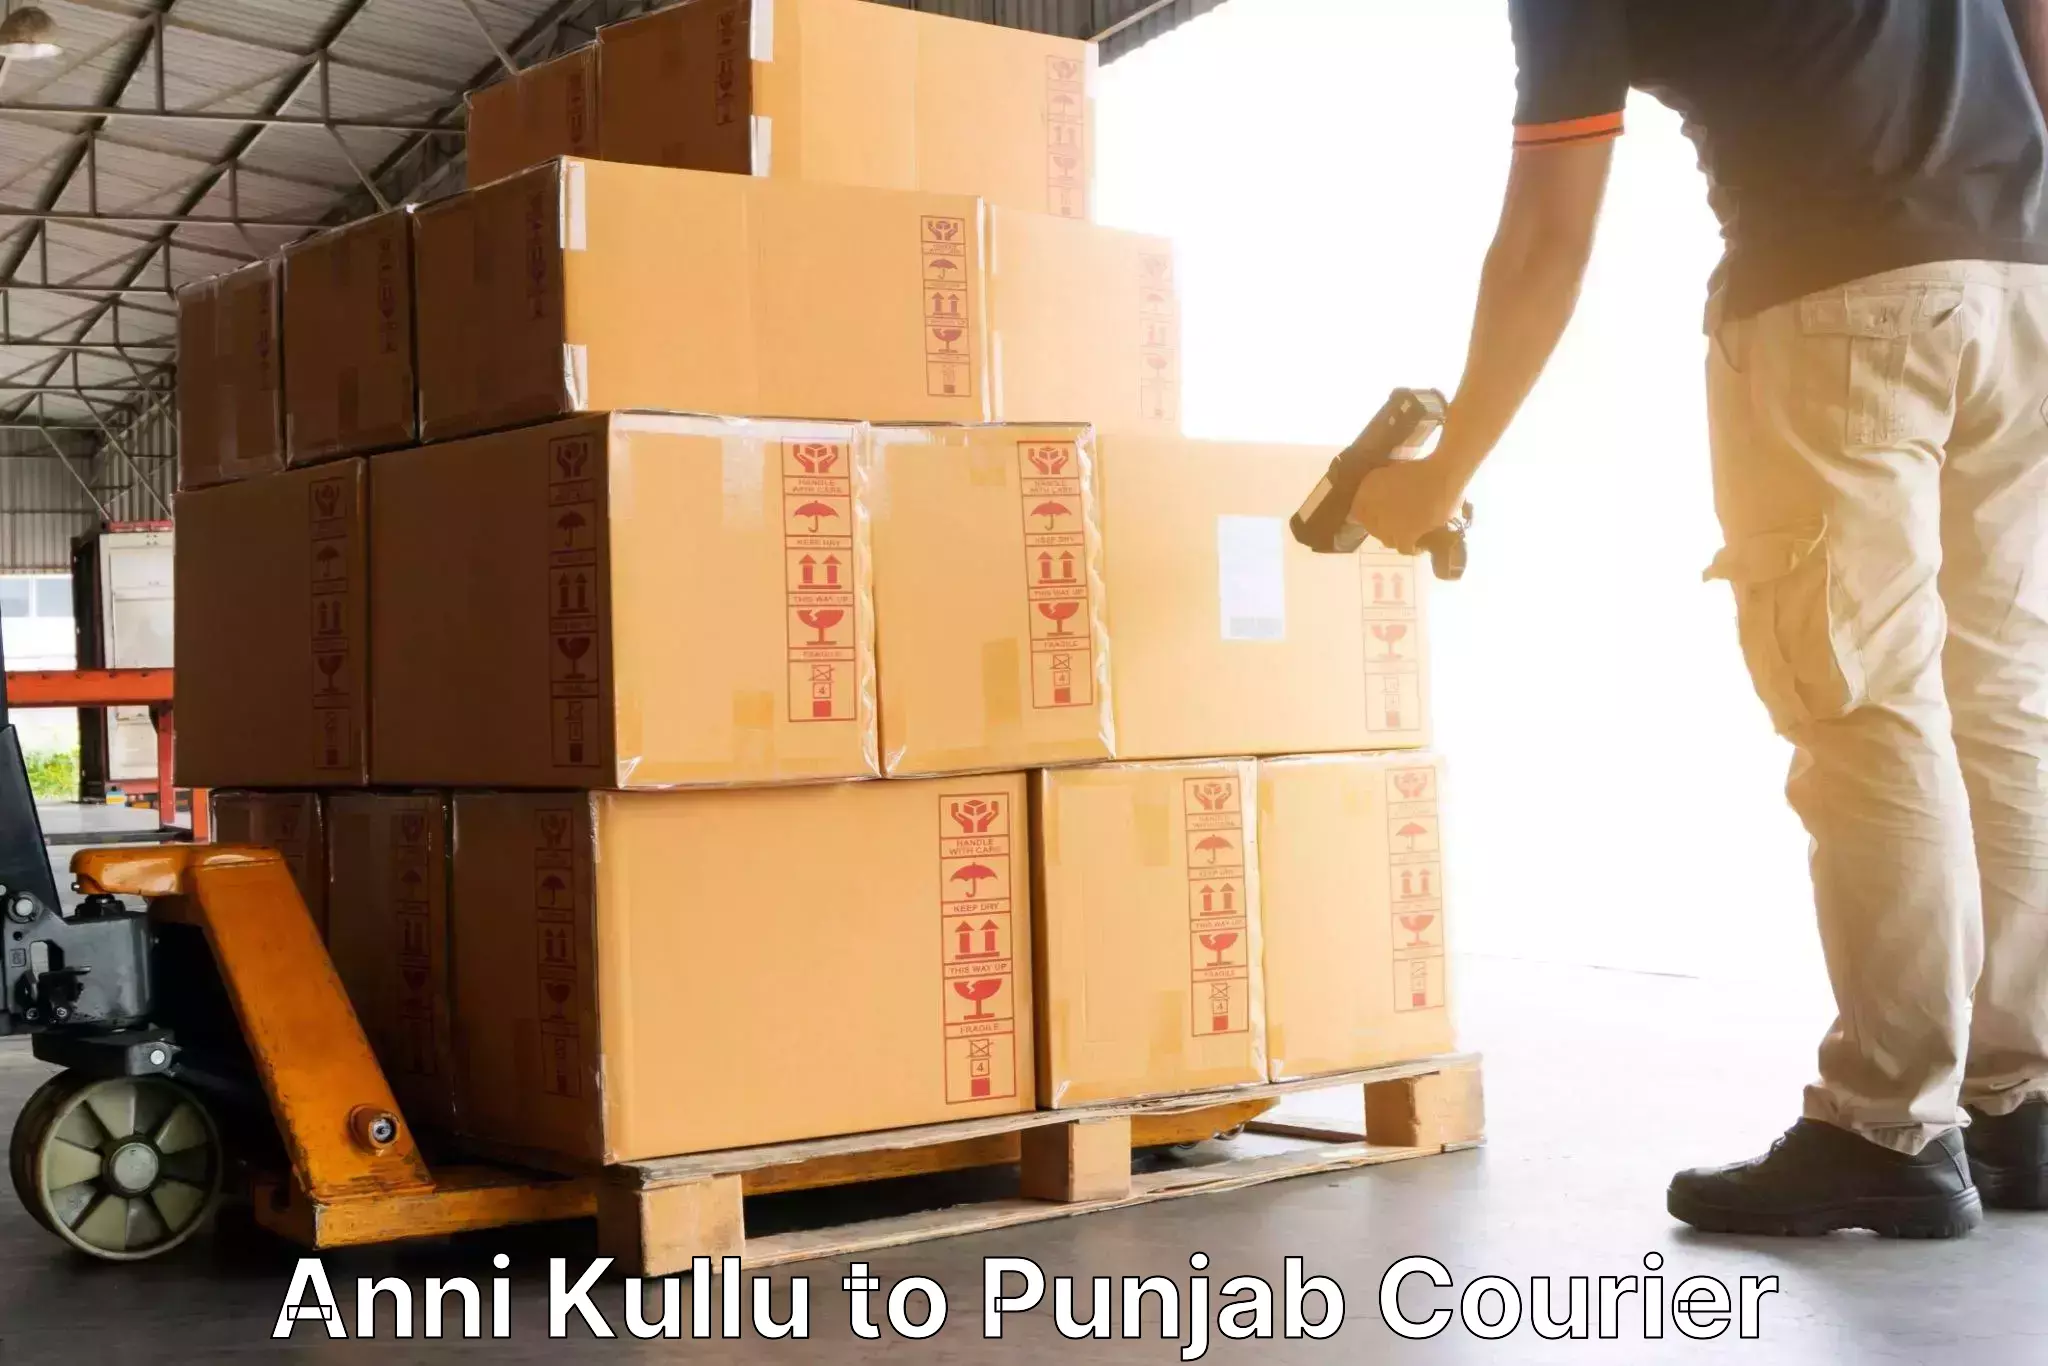 Emergency parcel delivery in Anni Kullu to Goindwal Sahib